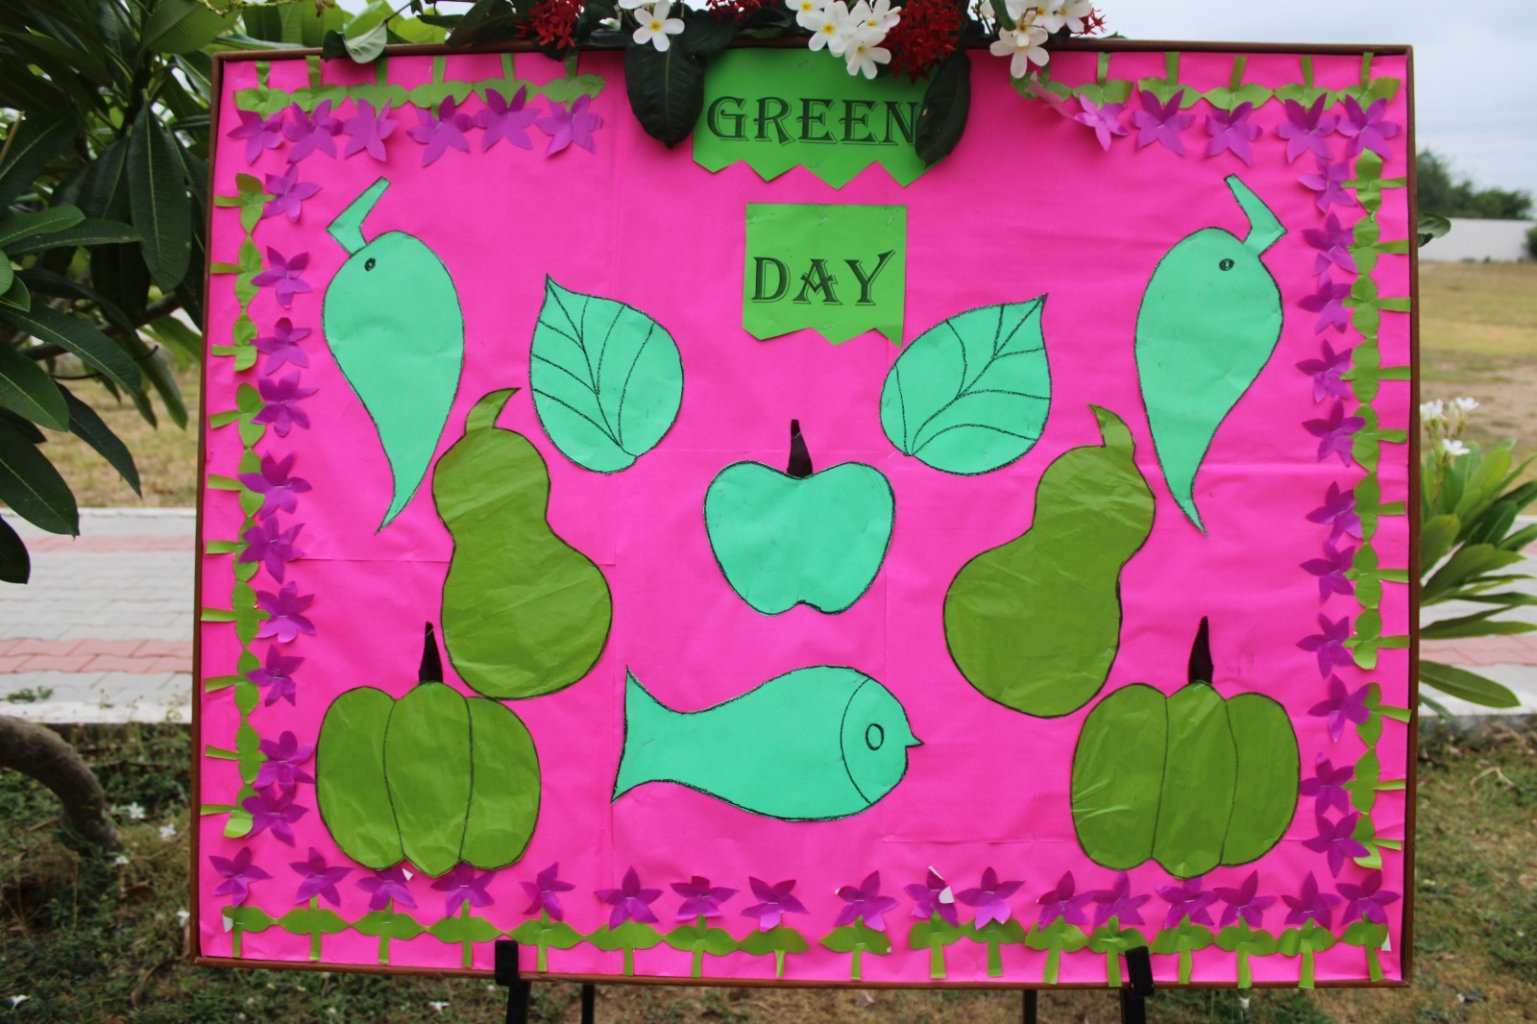 Green/Environment Day Celebration